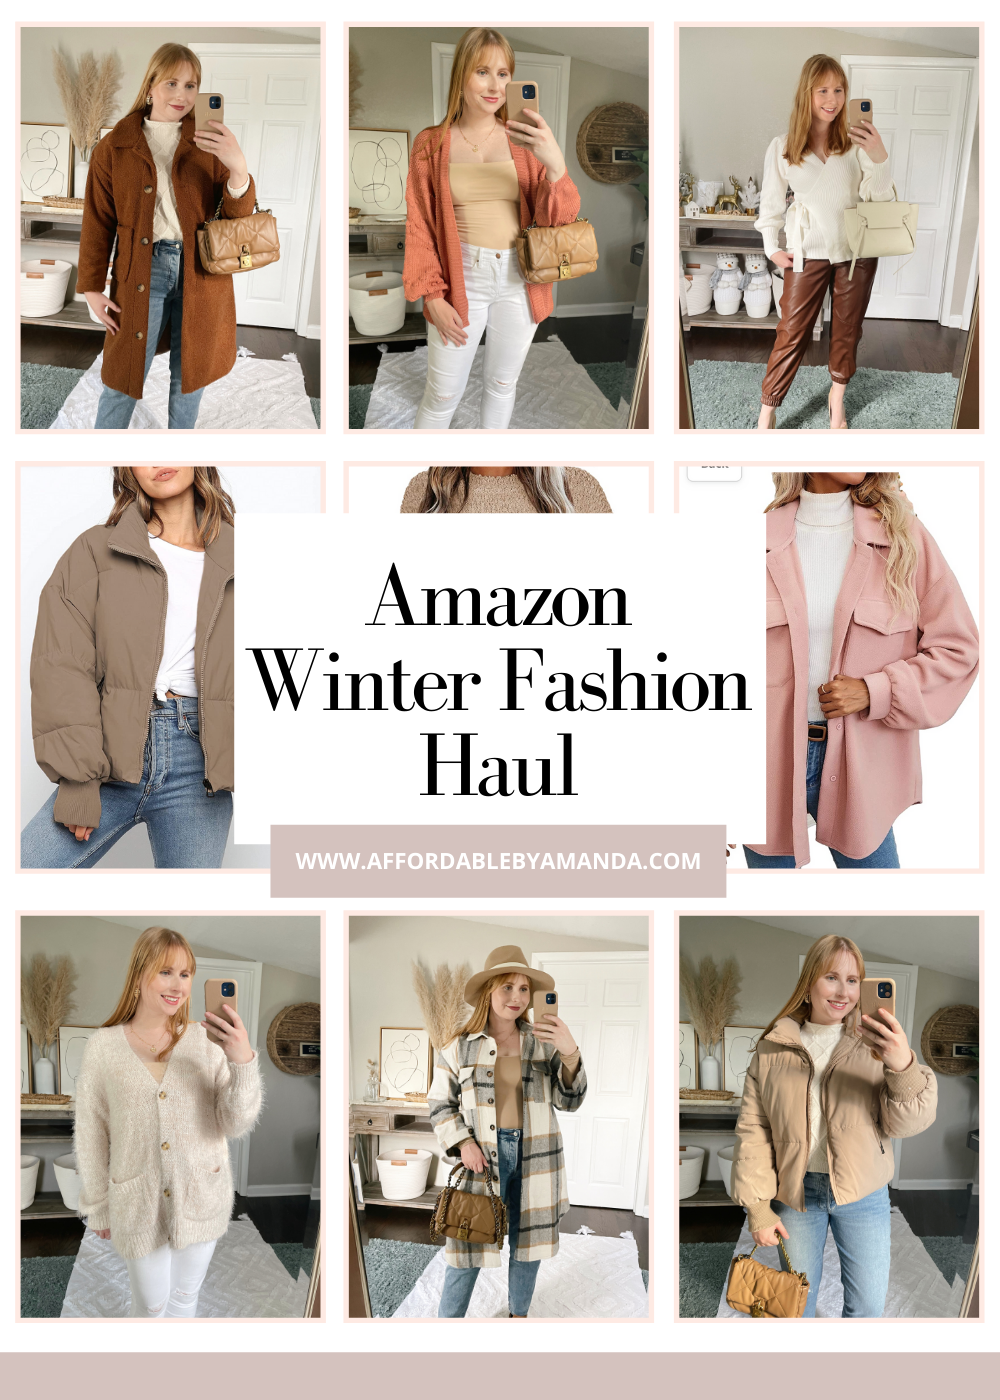 Amazon Winter Fashion Haul - Affordable by Amanda